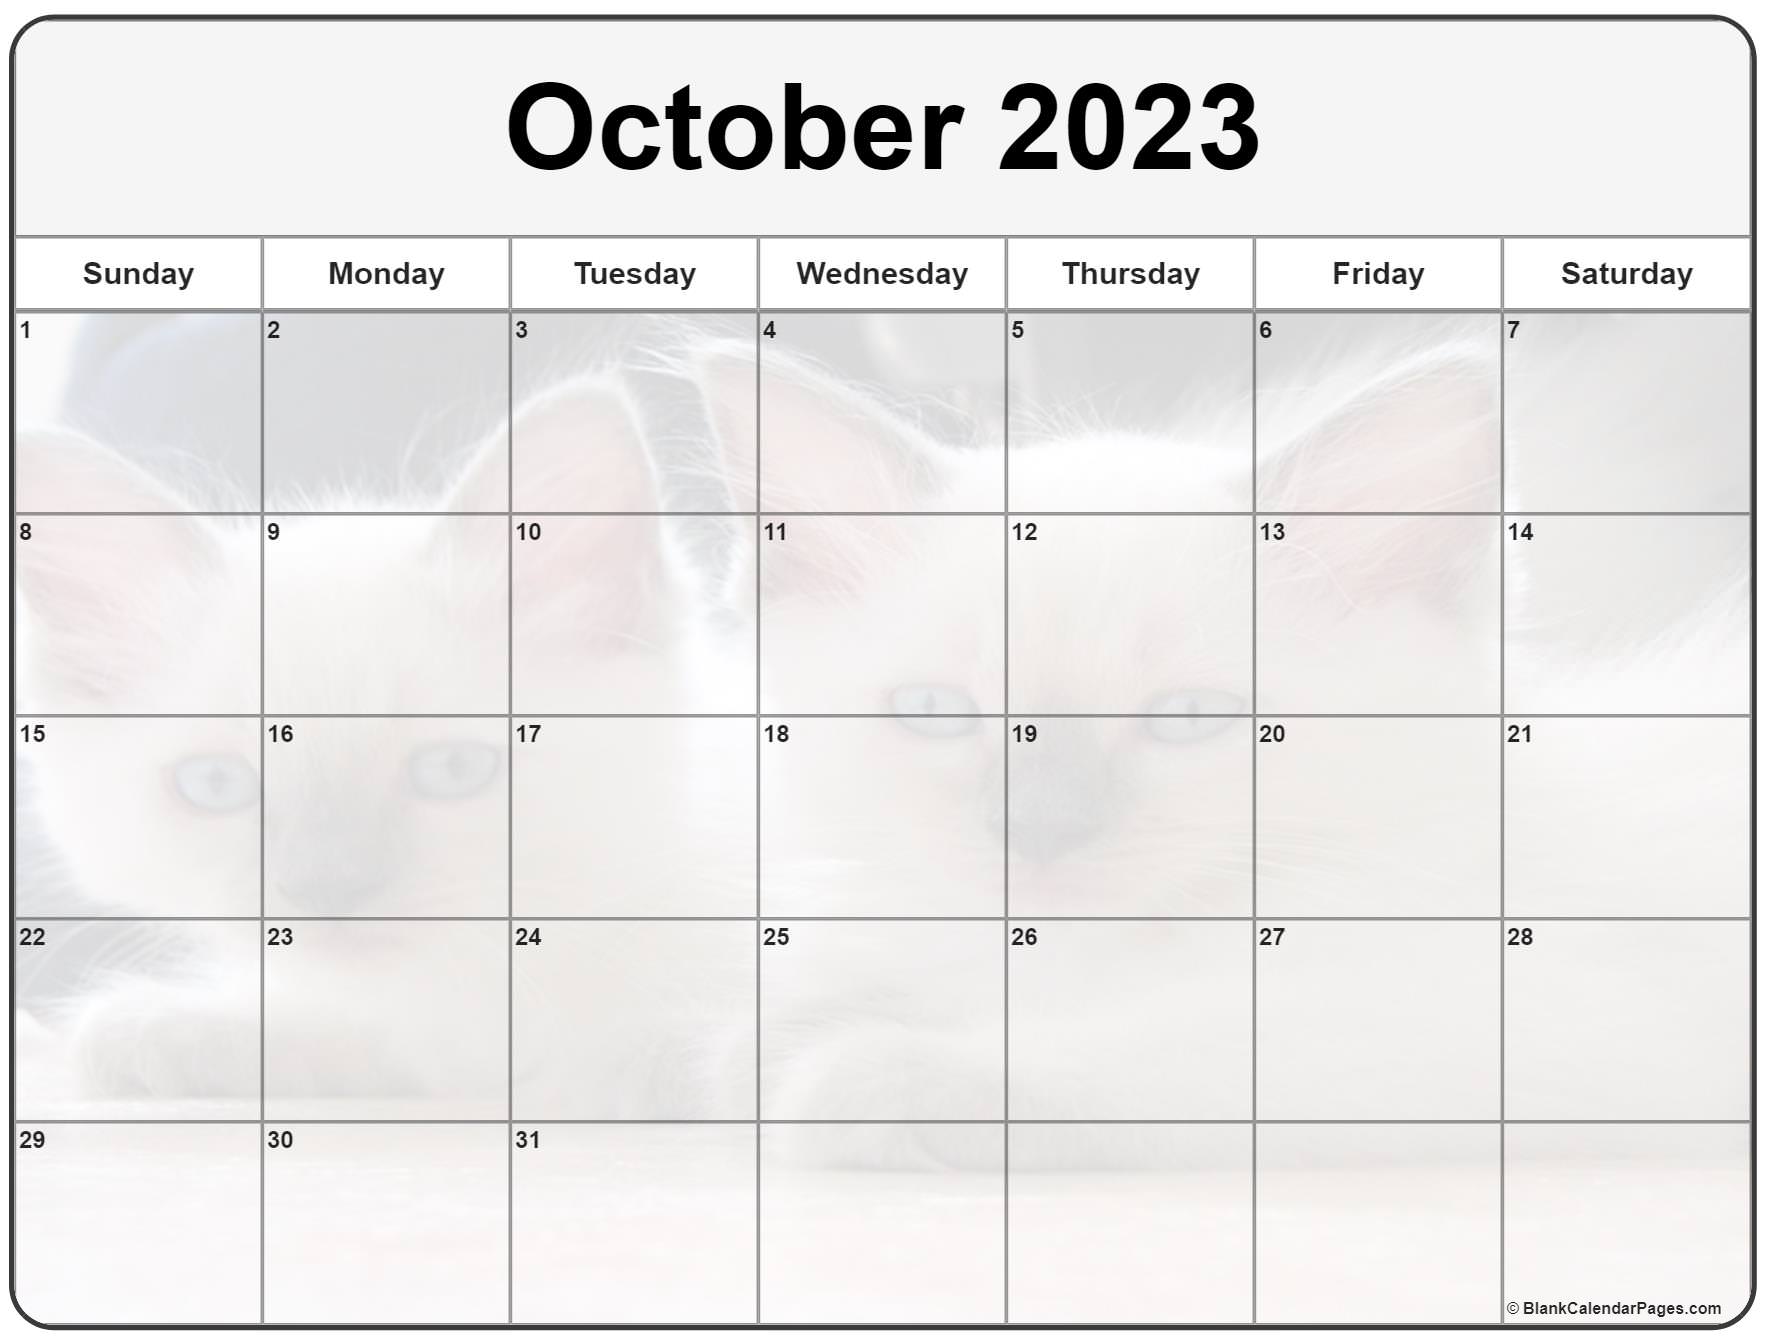 october-2023-calendar